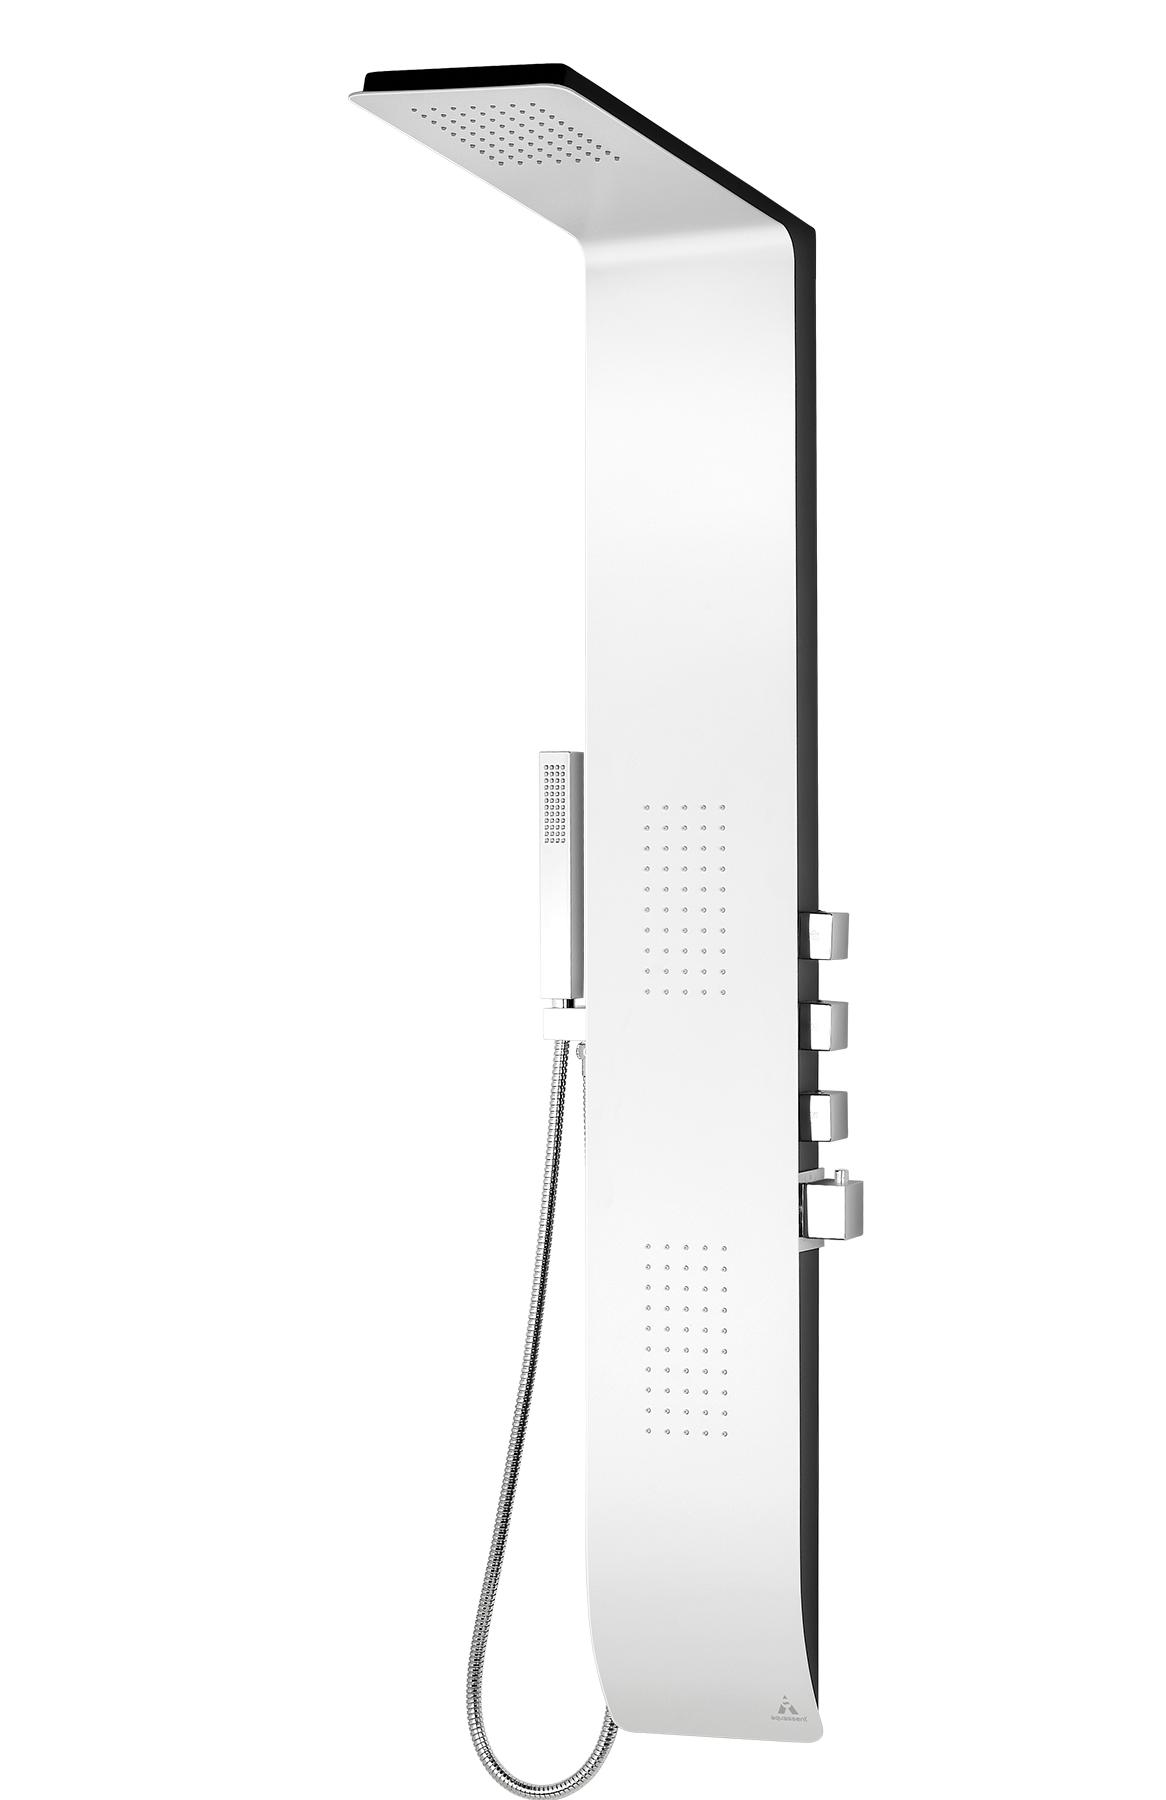 Columna de ducha termostatico Kiara blanco con negro de Aquassent